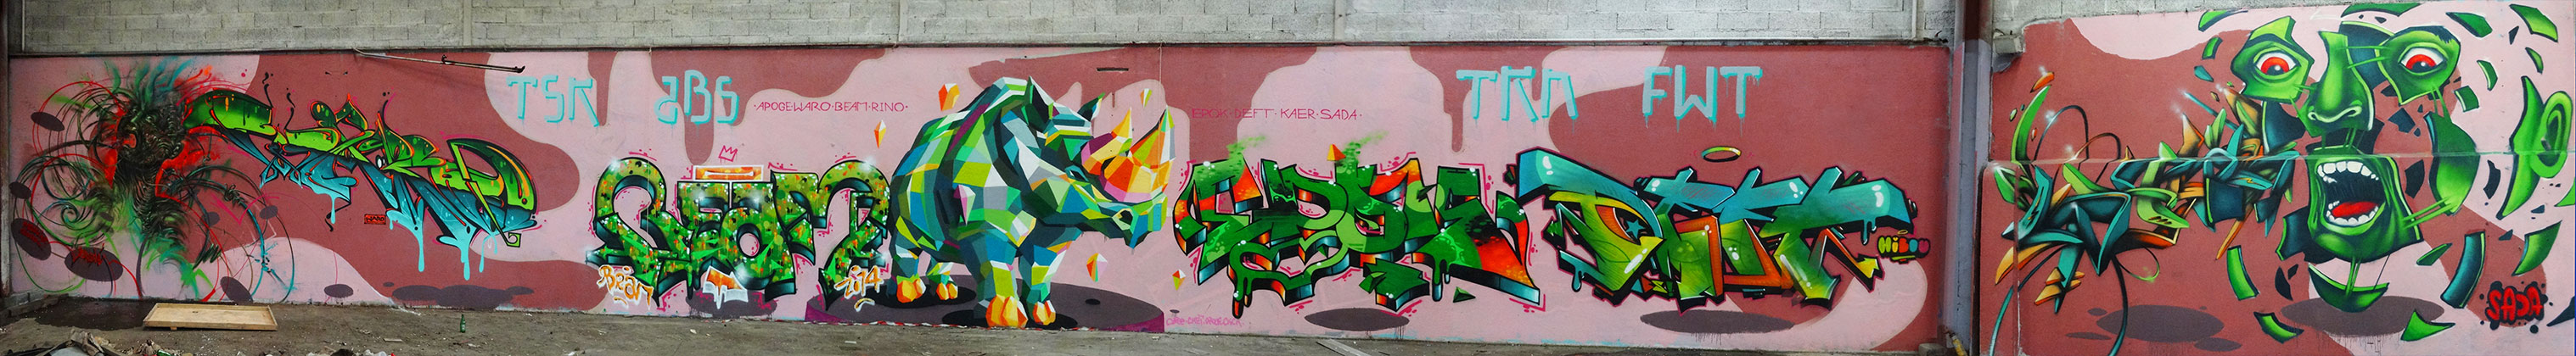 2014 fresque graffiti brezet rino deft_sada apoge waro beam epok kaer